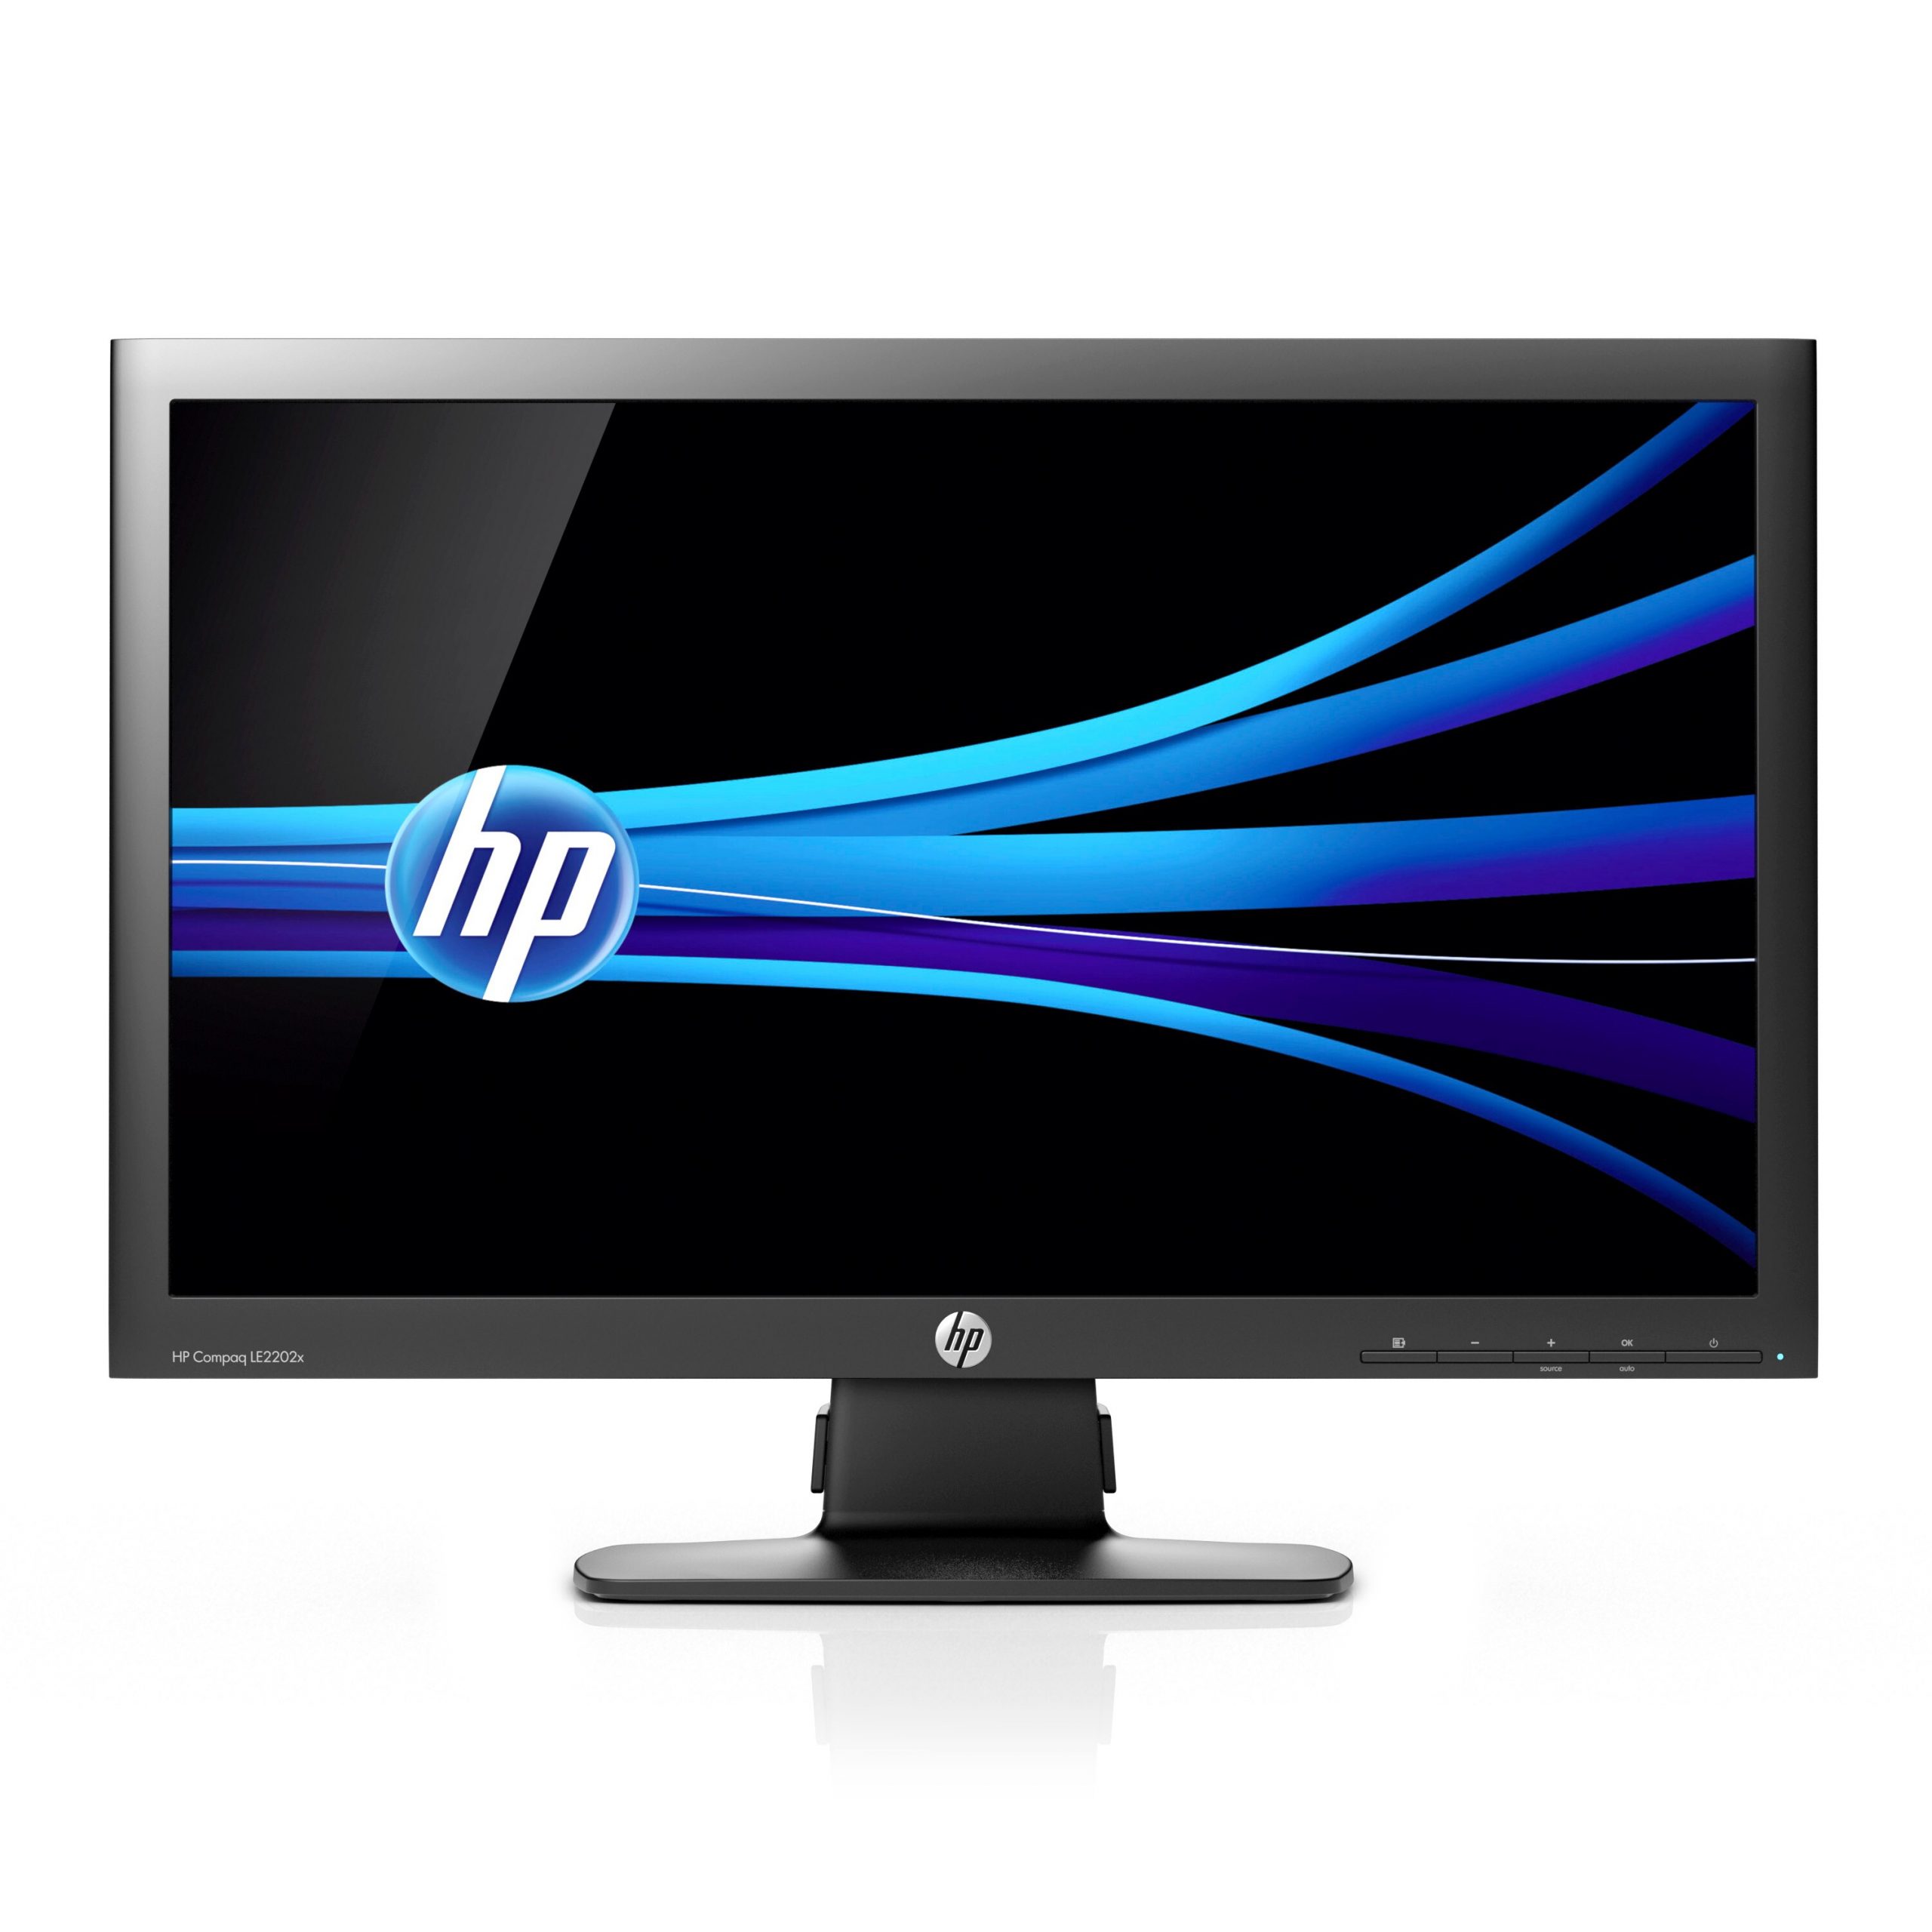 HP Compaq LE2202x LCD Monitor 22″ 1920x1080 Pixel FullHD 16:9 Response Time 5ms Contrast 1000:1 Brightness 250 cd/m²